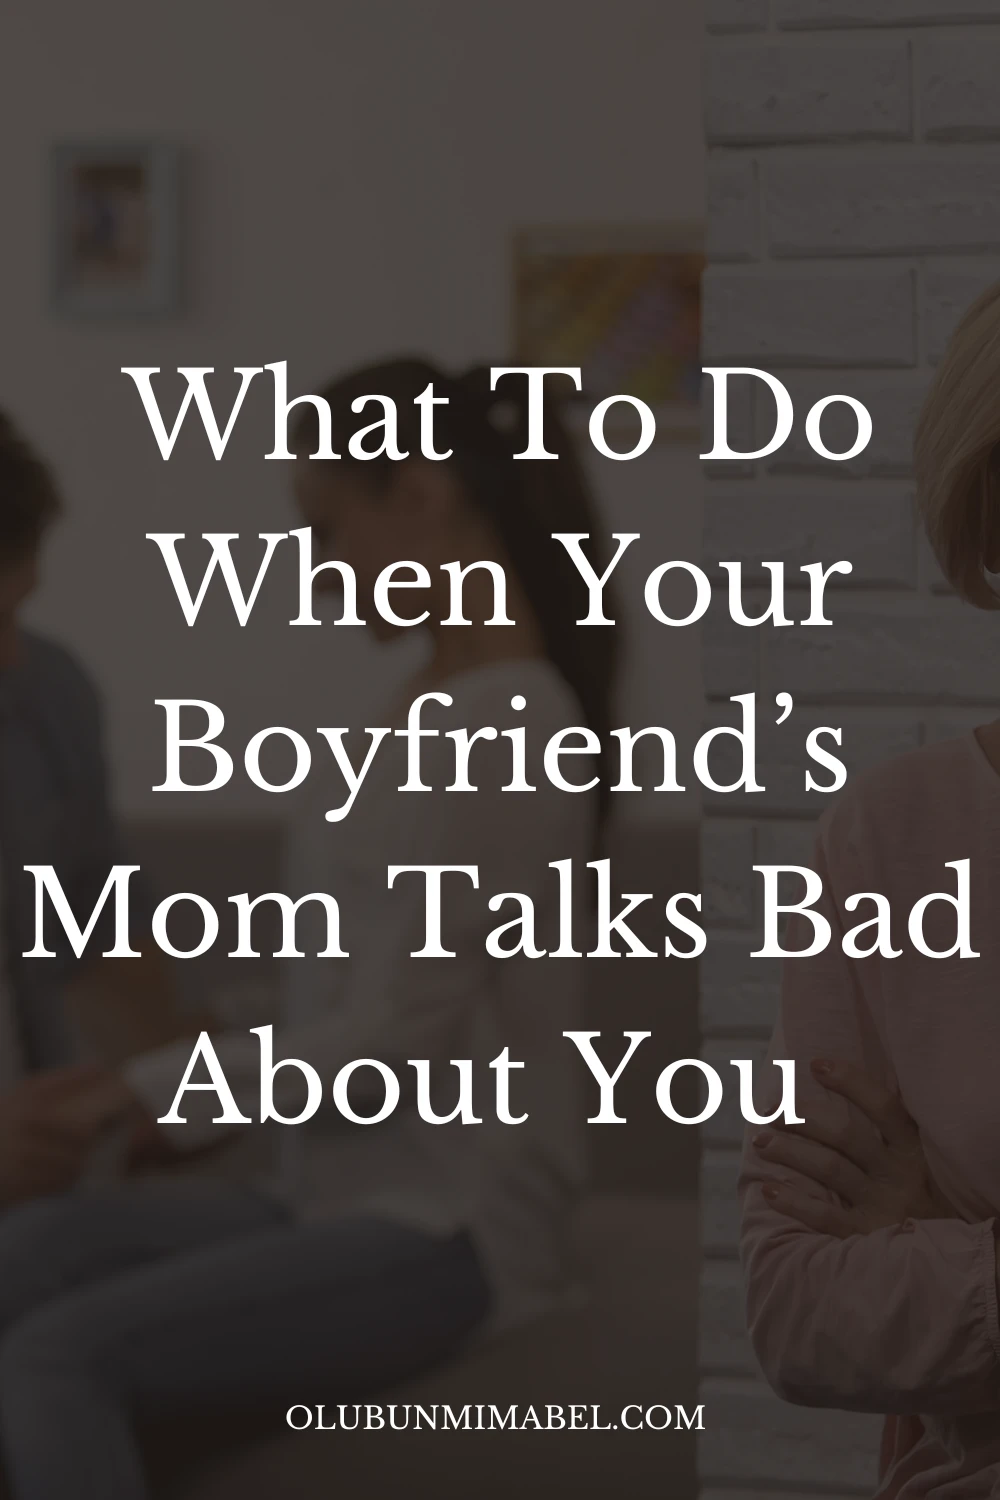 My Boyfriend's Mom Talks Bad About Me